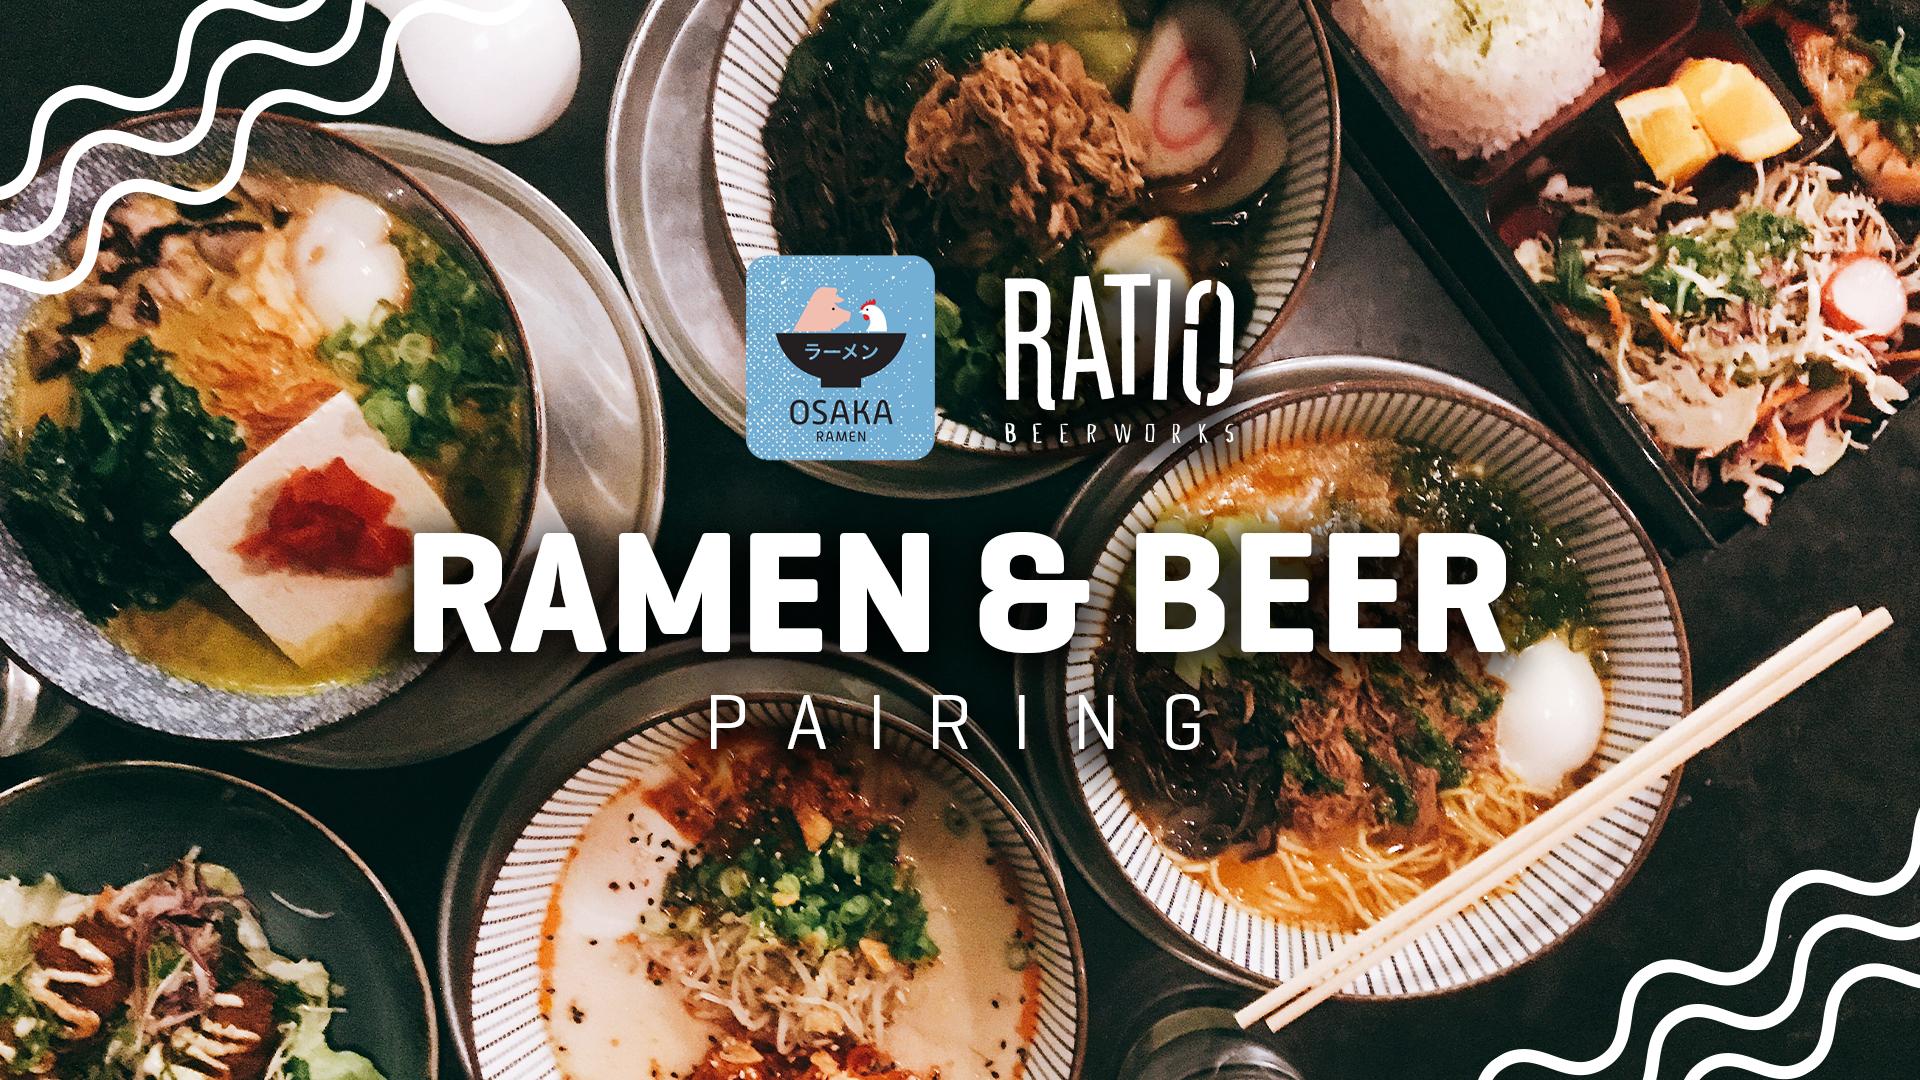 SOLD OUT - Ramen & Ratio Flight Pairings with Ratio Beerworks & Osaka Ramen